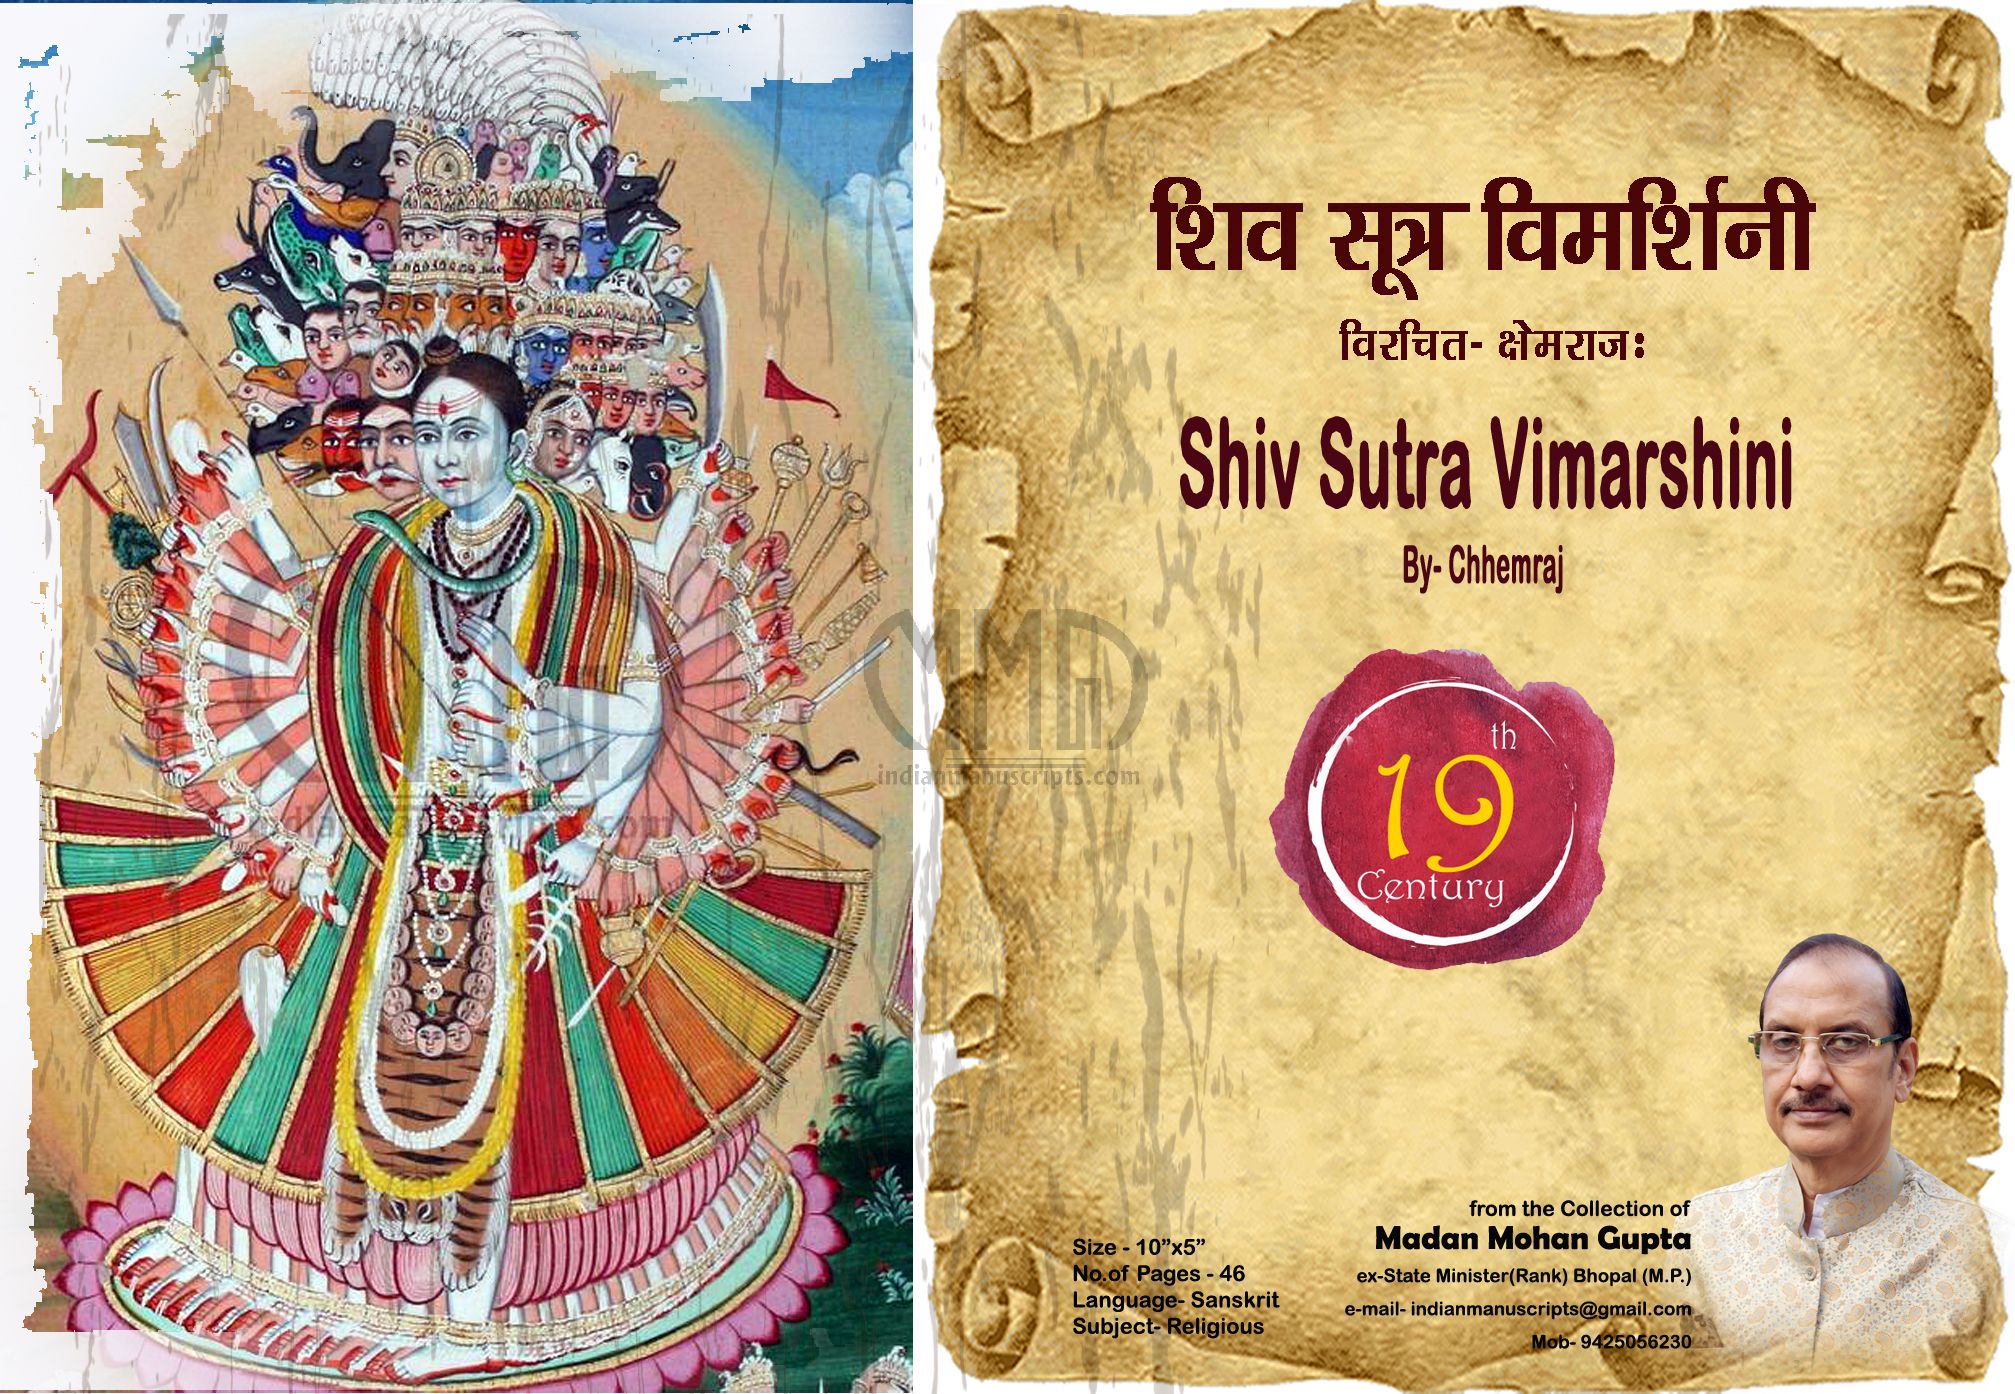 Shiv Sutra Vimarshini